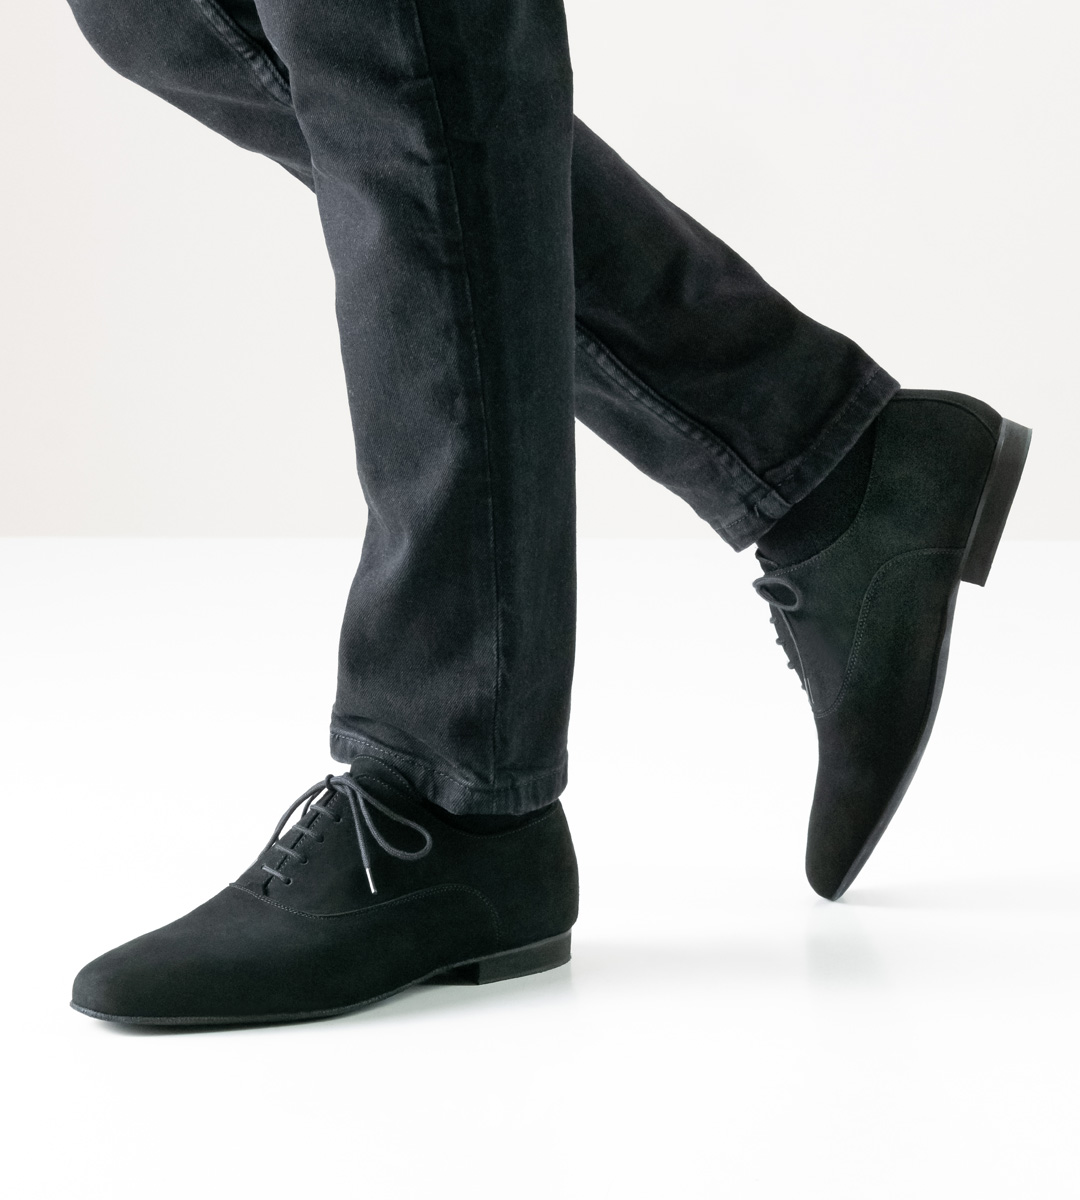 Oxford men's dance shoe from Werner Kern in black velour